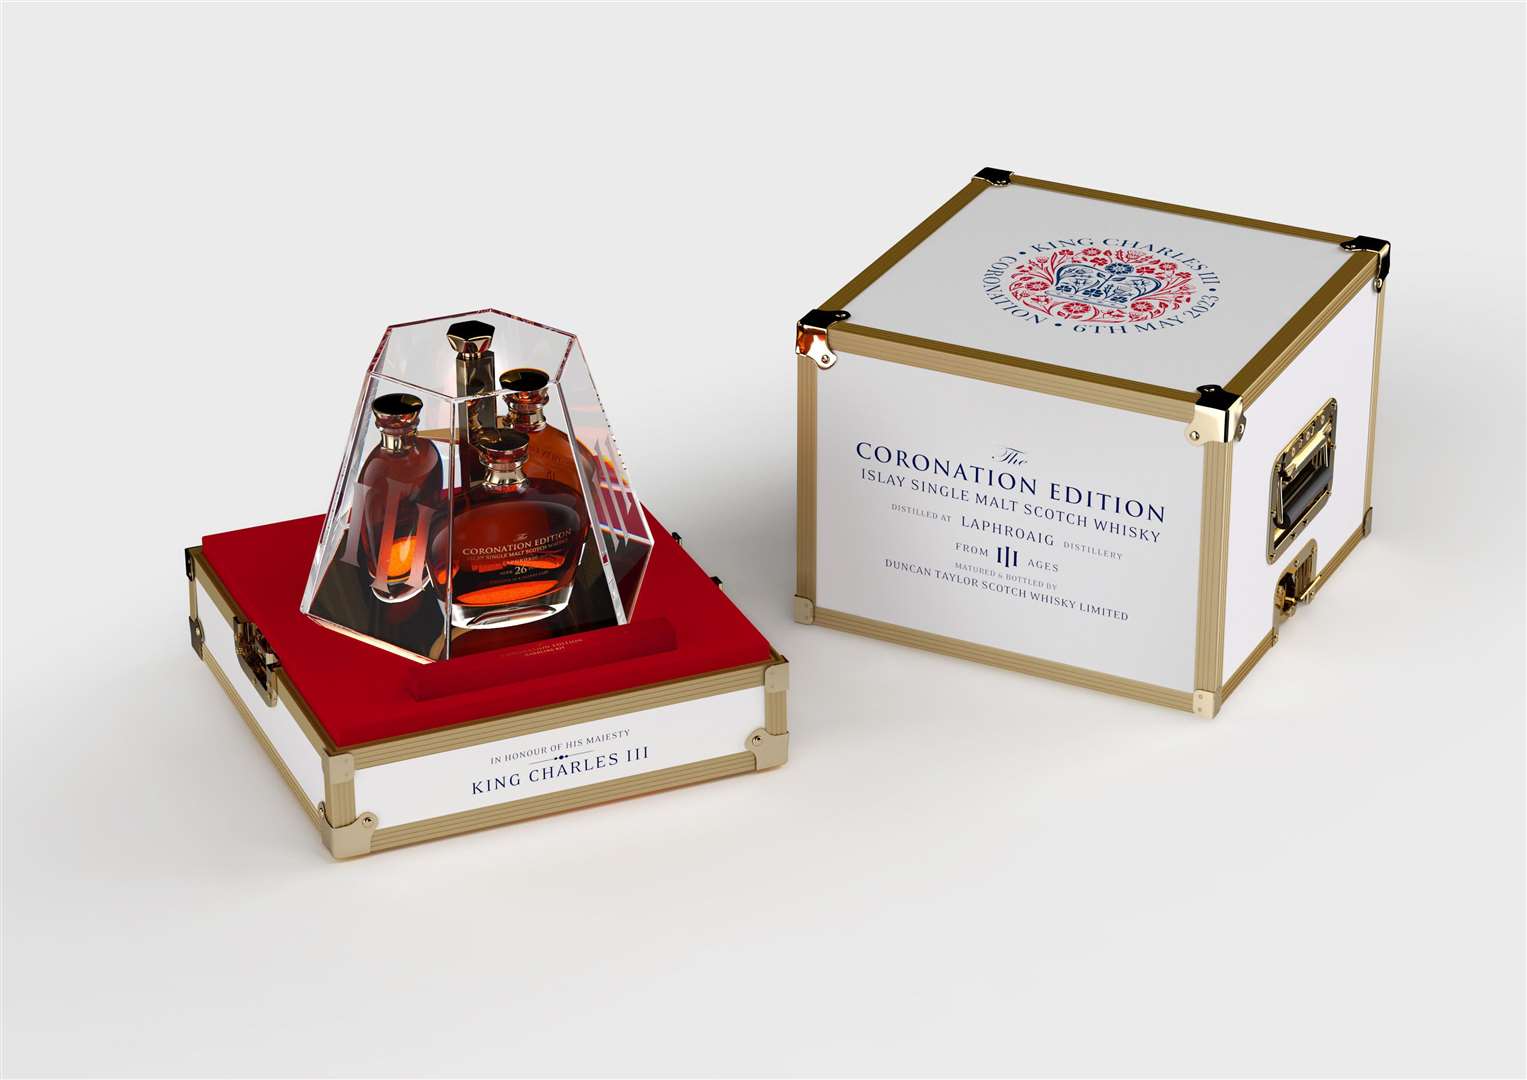 The Coronation Edition whisky celebrates one of King Charles III favourite whiskies Laphroaig.